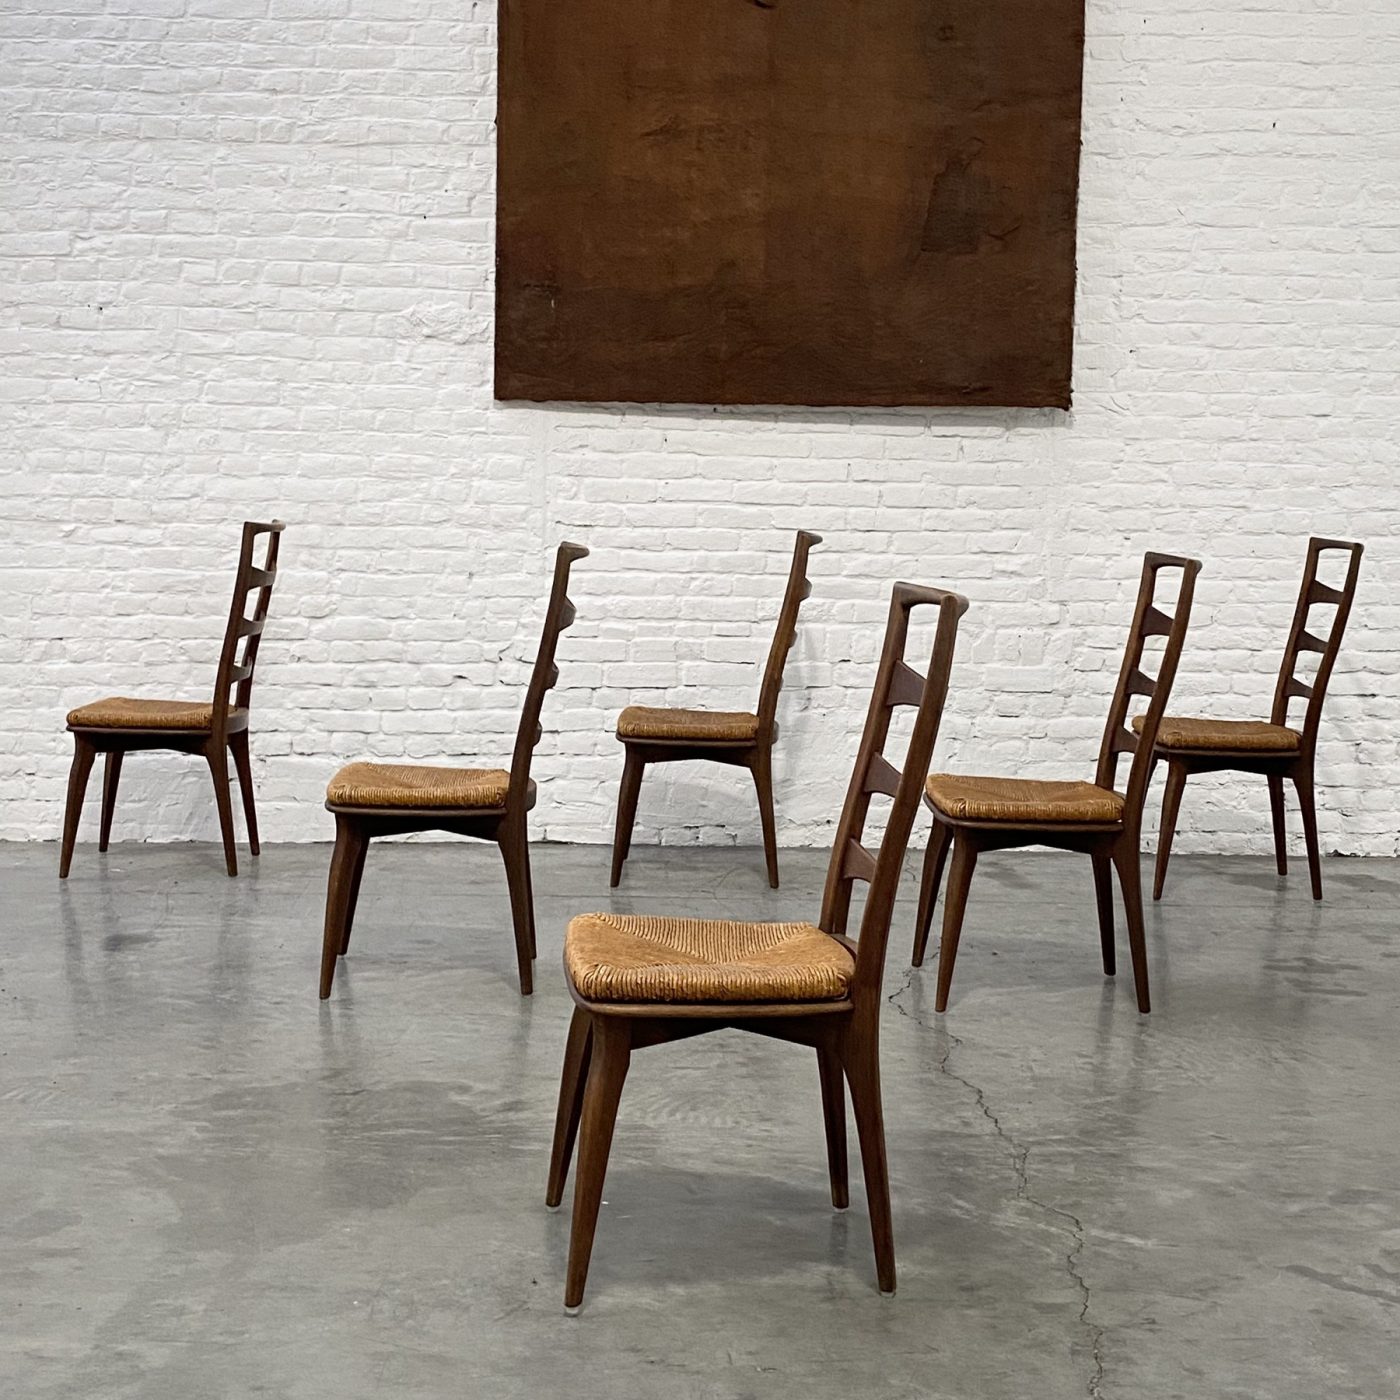 objet-vagabond-vintage-chairs0004